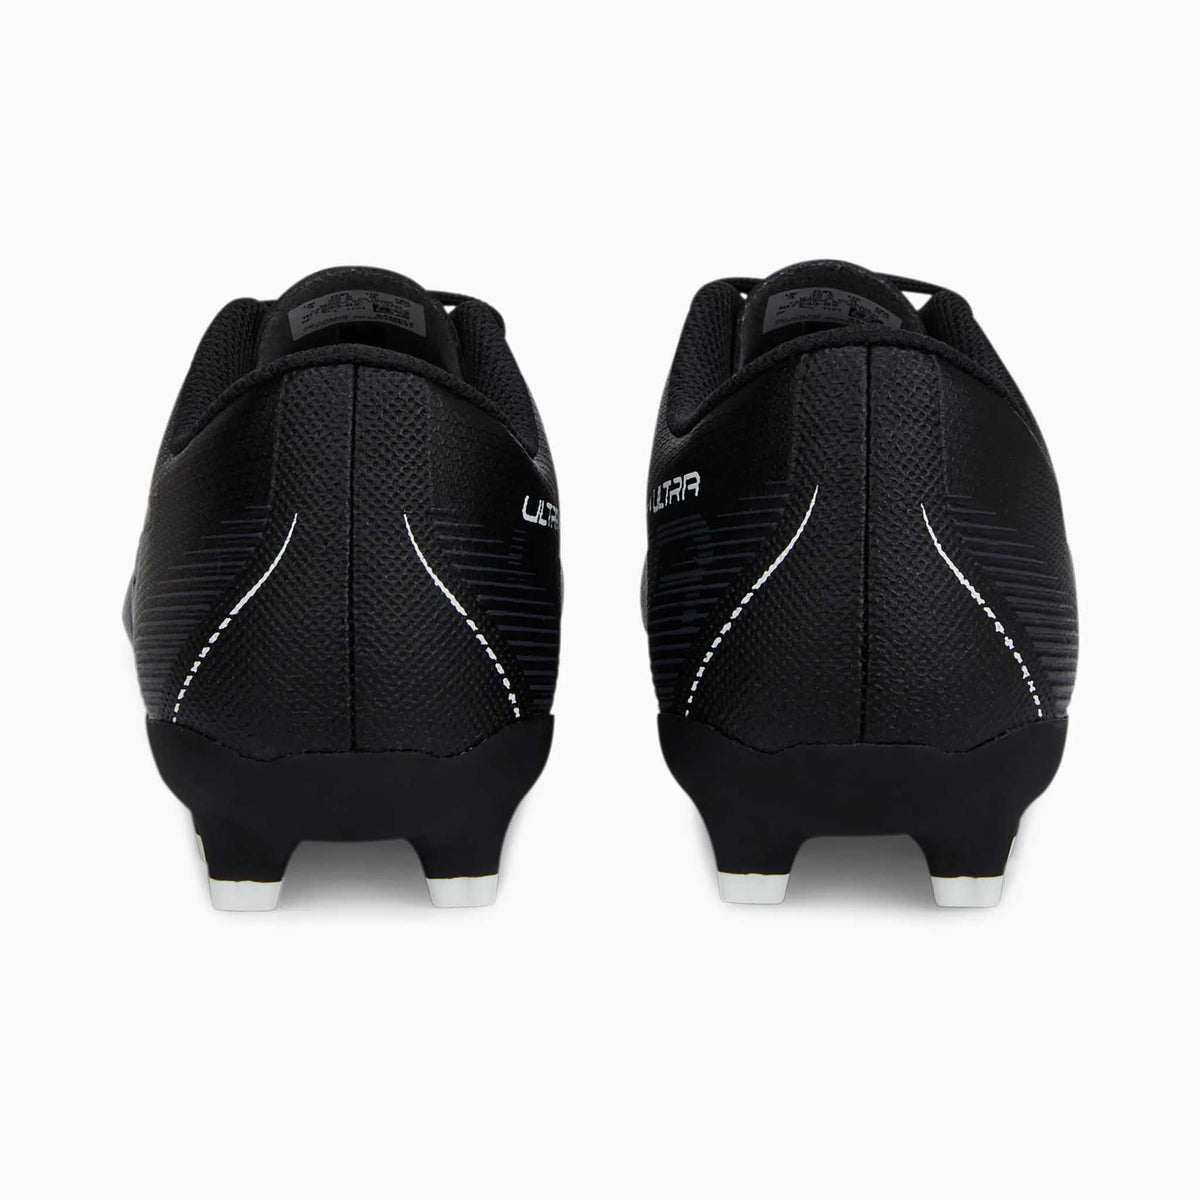 Puma Ultra Play FG/AG souliers soccer crampons enfant talons- noir